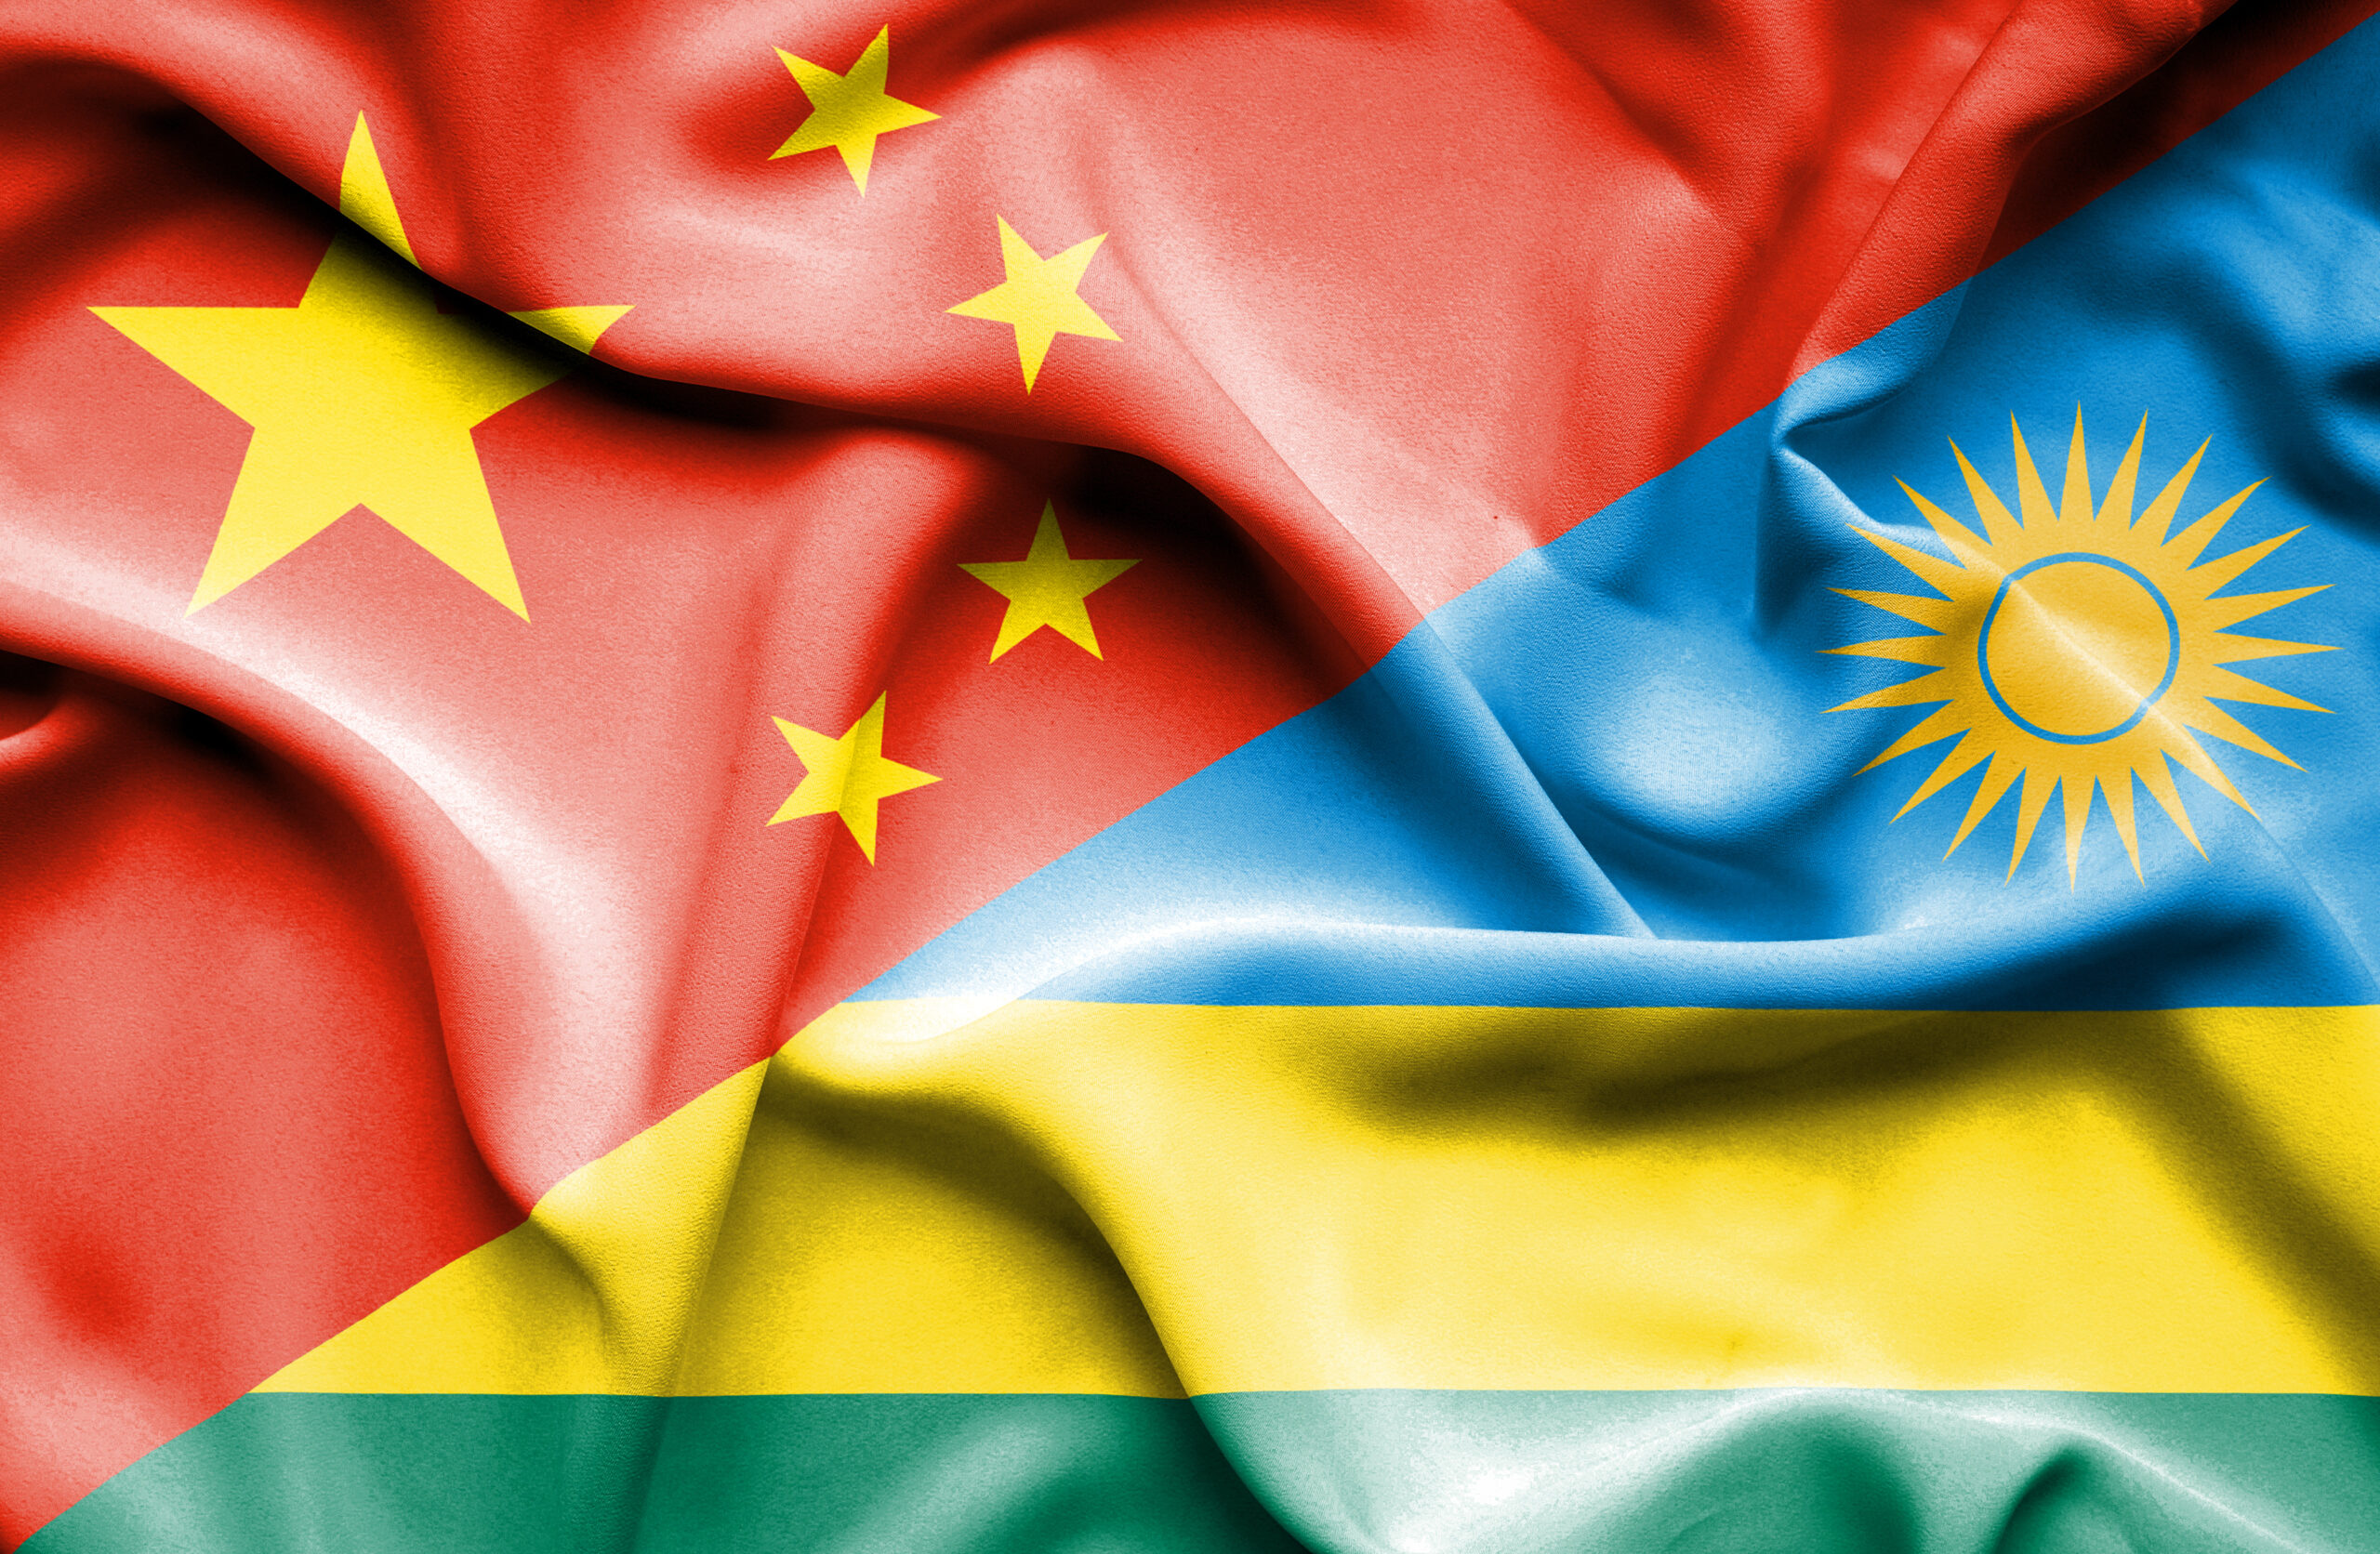 AFRICAN GATEWAY: RWANDA AND CHINA’S DIGITAL SILK ROAD